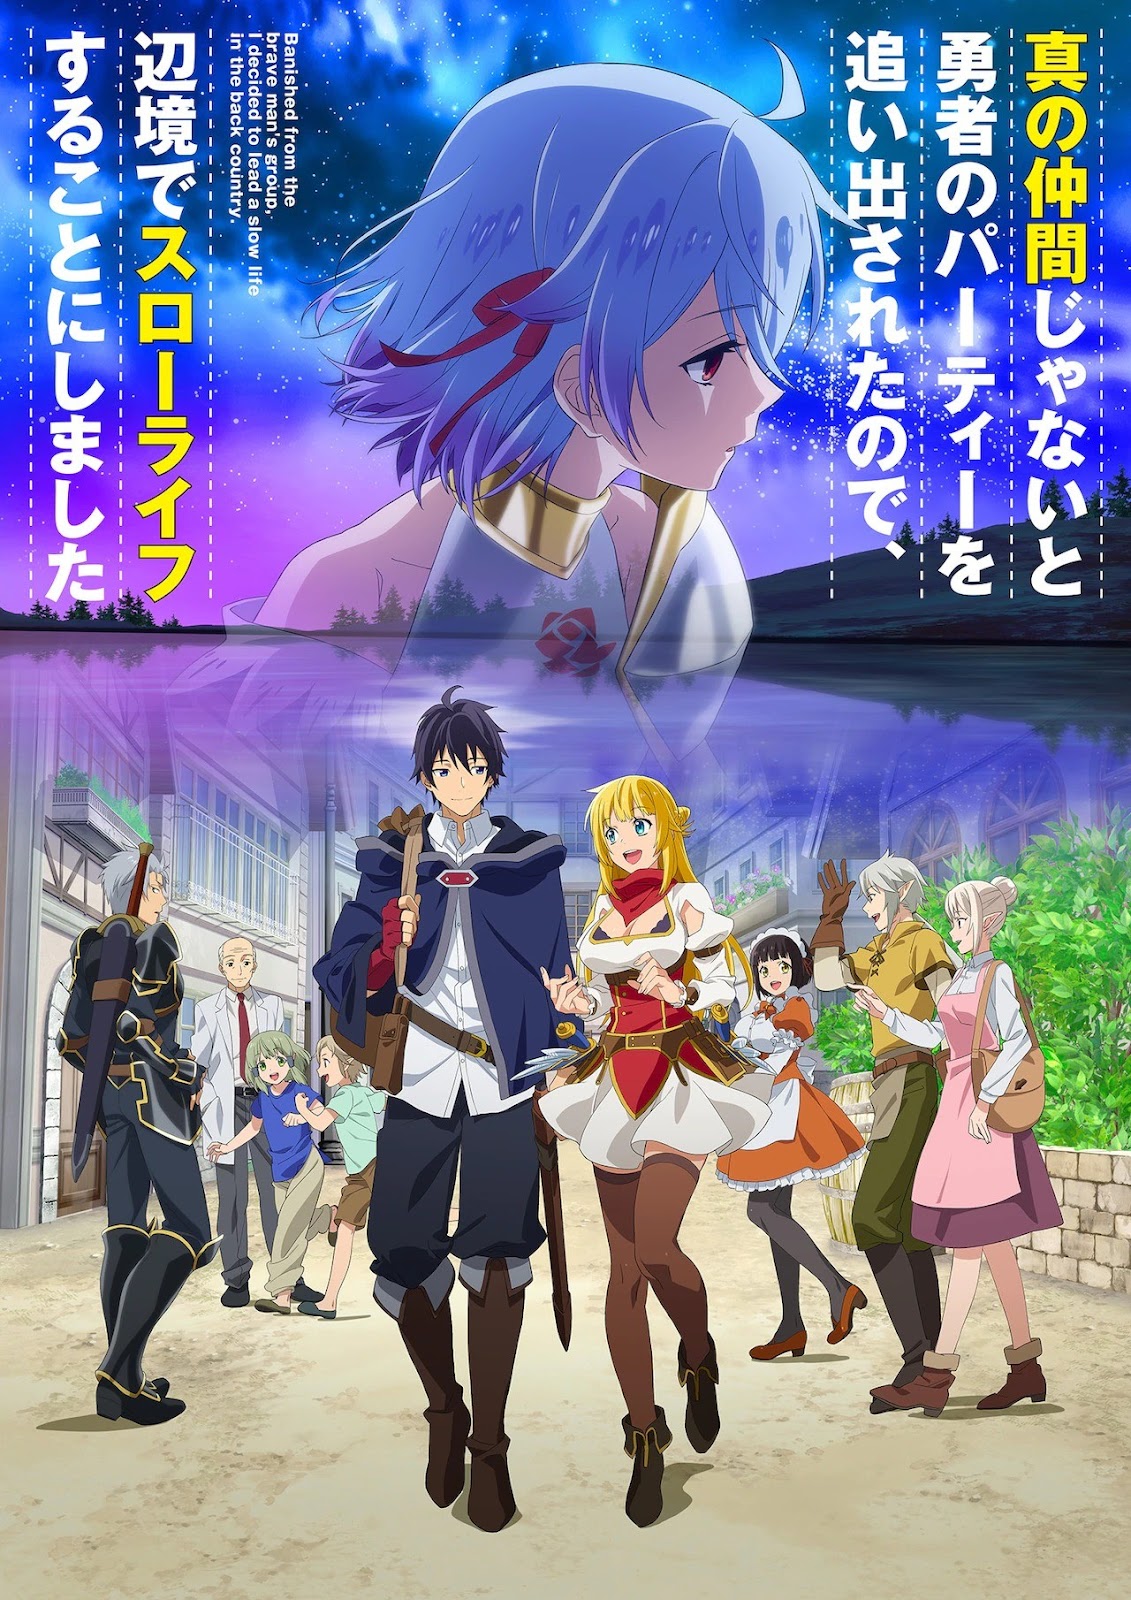 Shin no Nakama Mendapatkan Adaptasi Anime